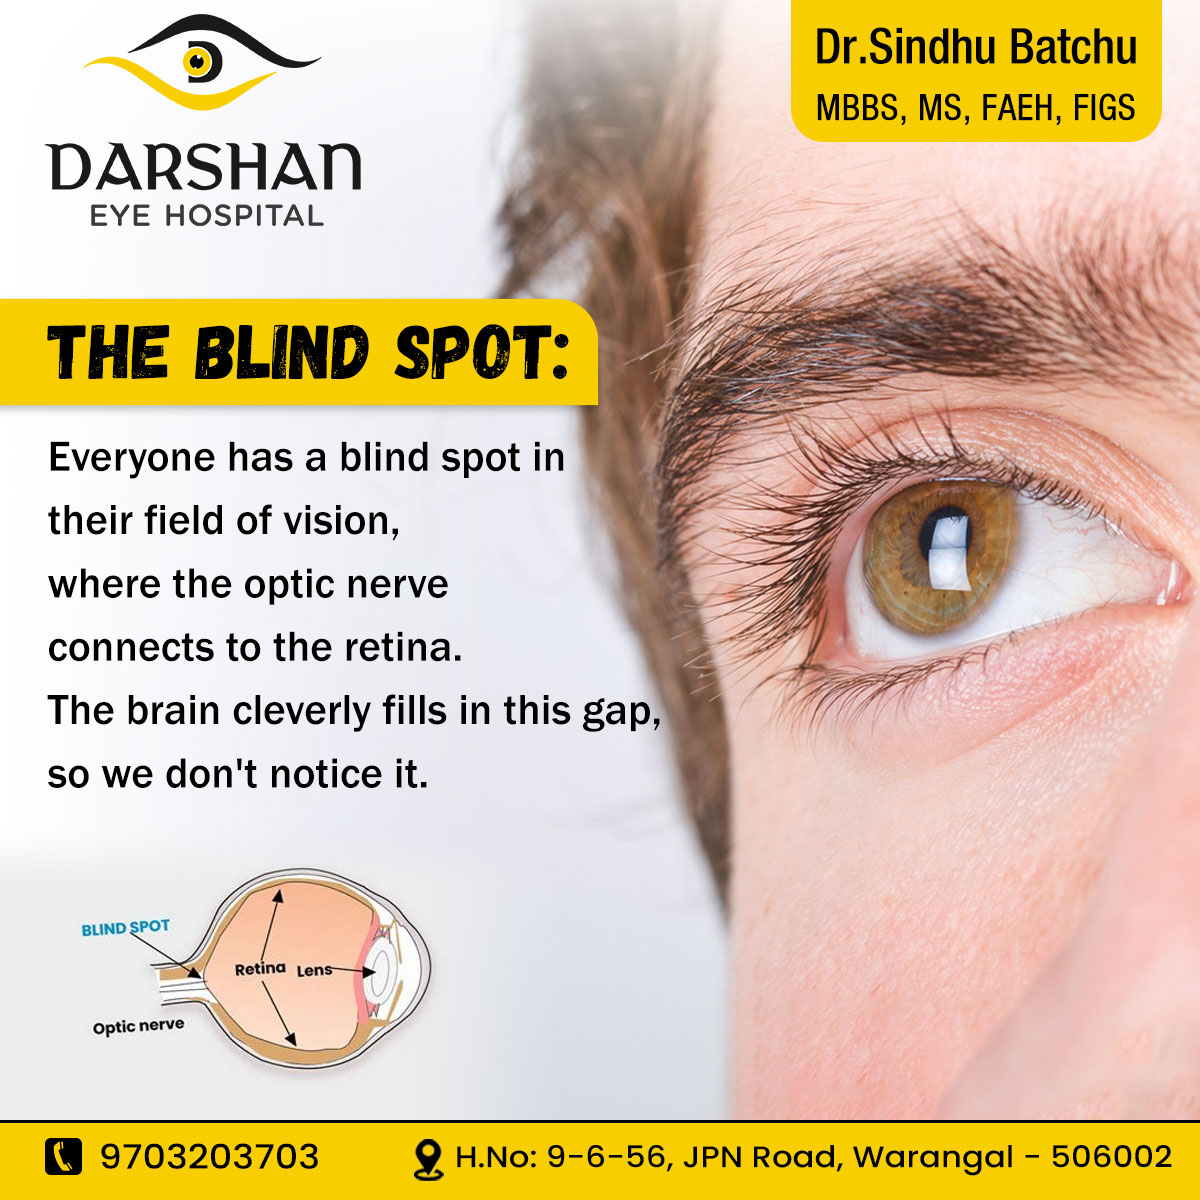 For more interesting topics, please follow Darshan Eye hospitals.

Contact us:970323703

#eyetests #eyehealth #Darshaneyehospital #darshanwarangal #eyecare #infectionfree #eyehealth #glaucoma #cataract